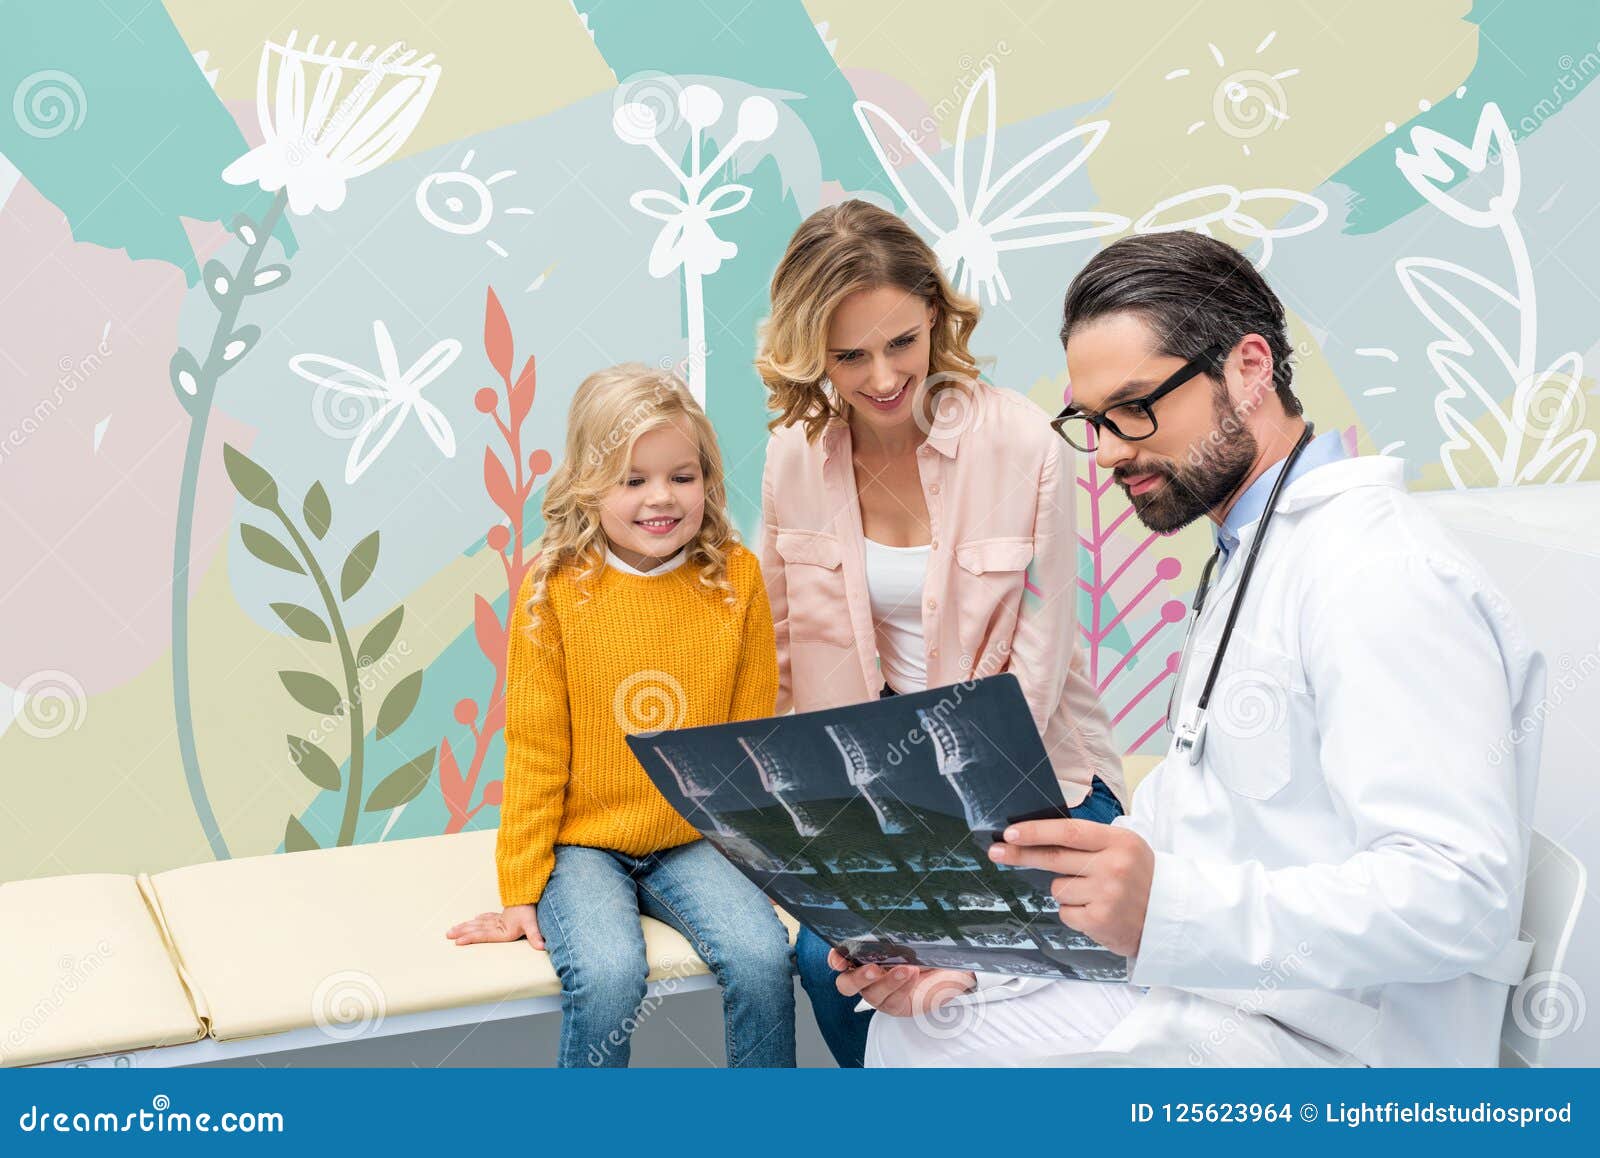 pediatrist showing x-ray